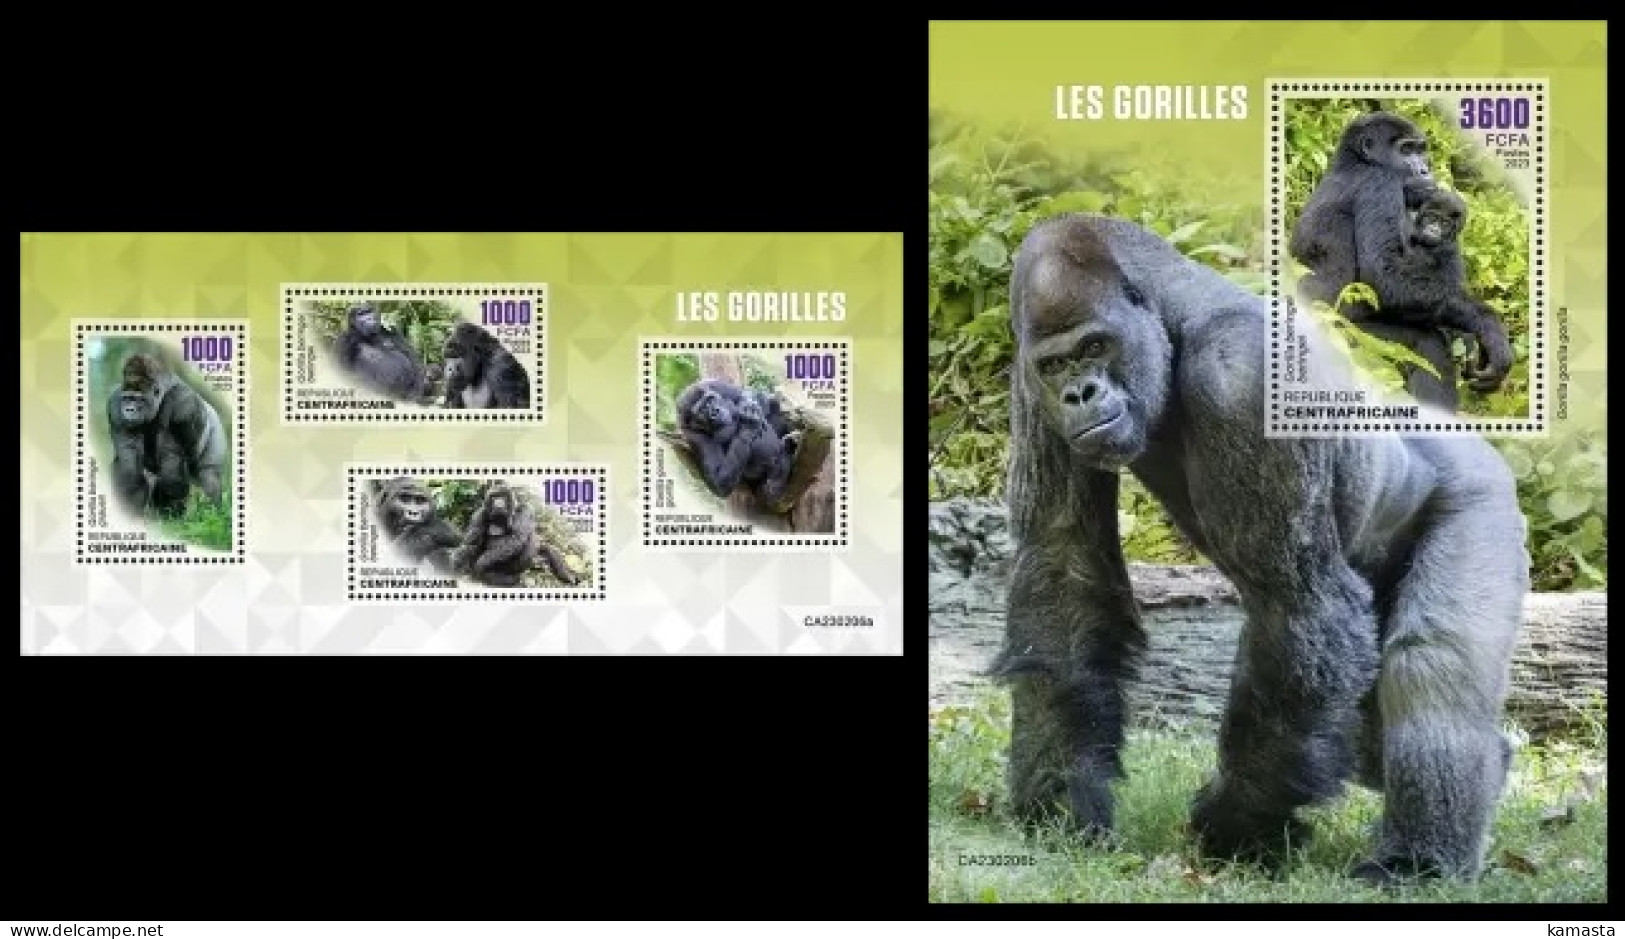 Central Africa 2023 Gorillas. (206) OFFICIAL ISSUE - Gorillas